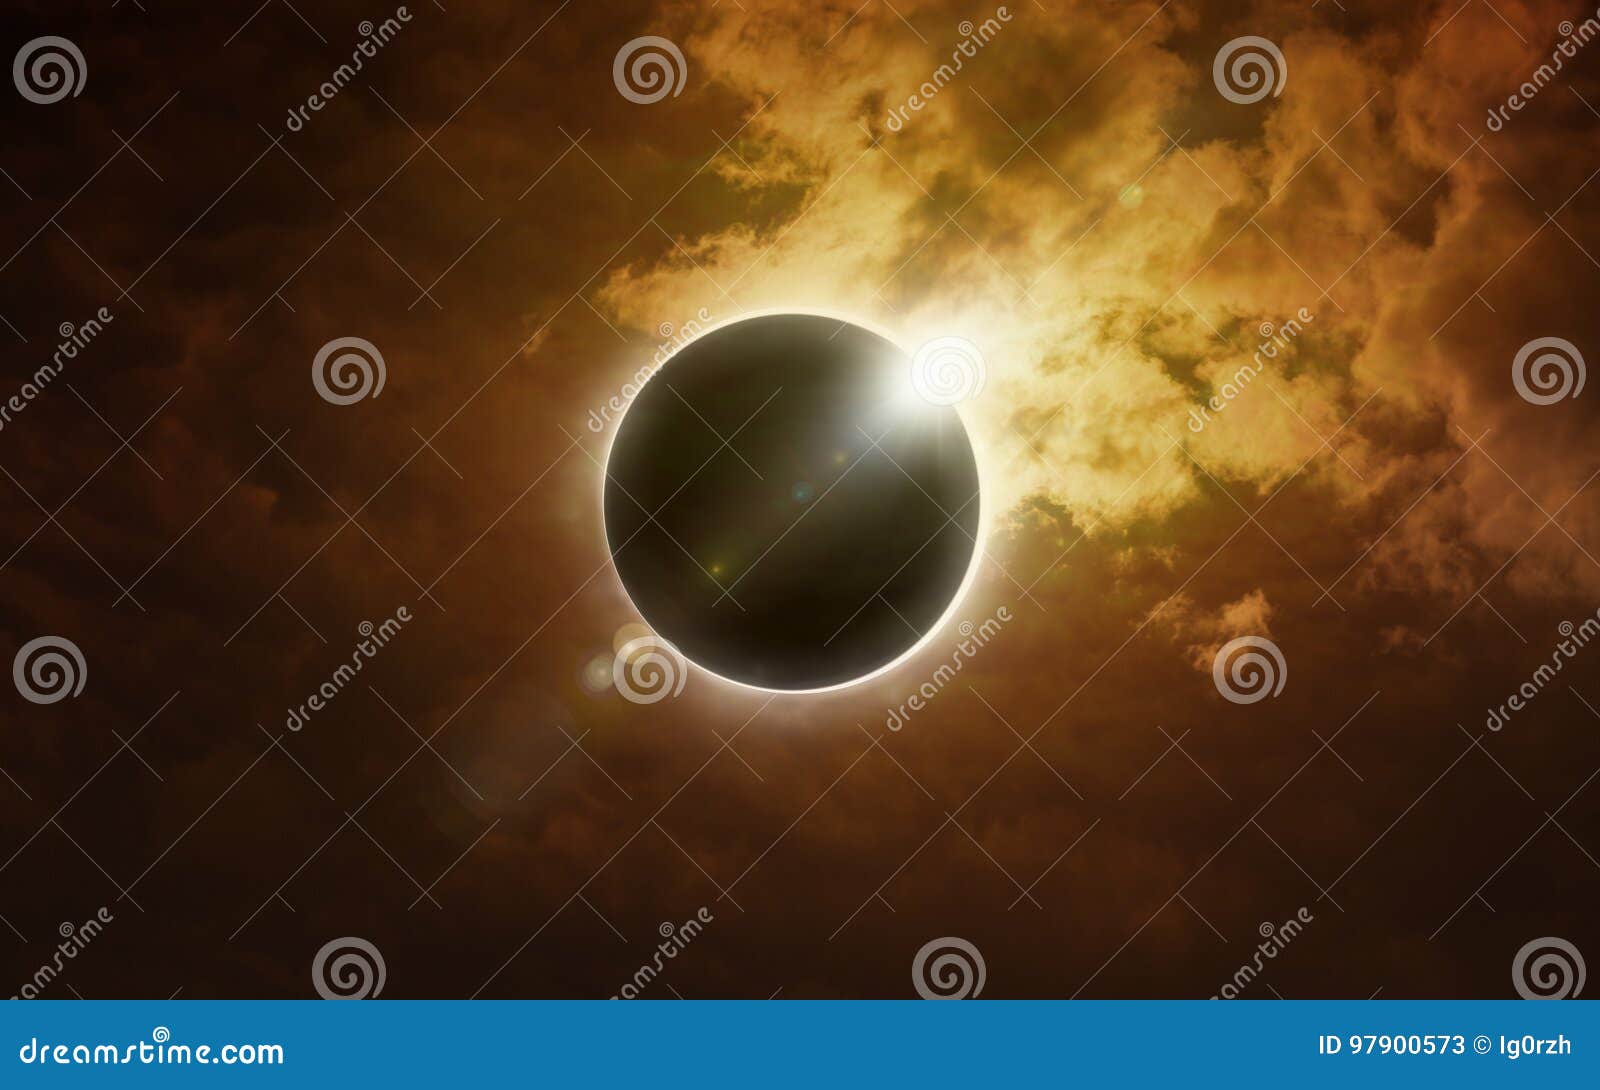 total solar eclipse in dark glowing sky